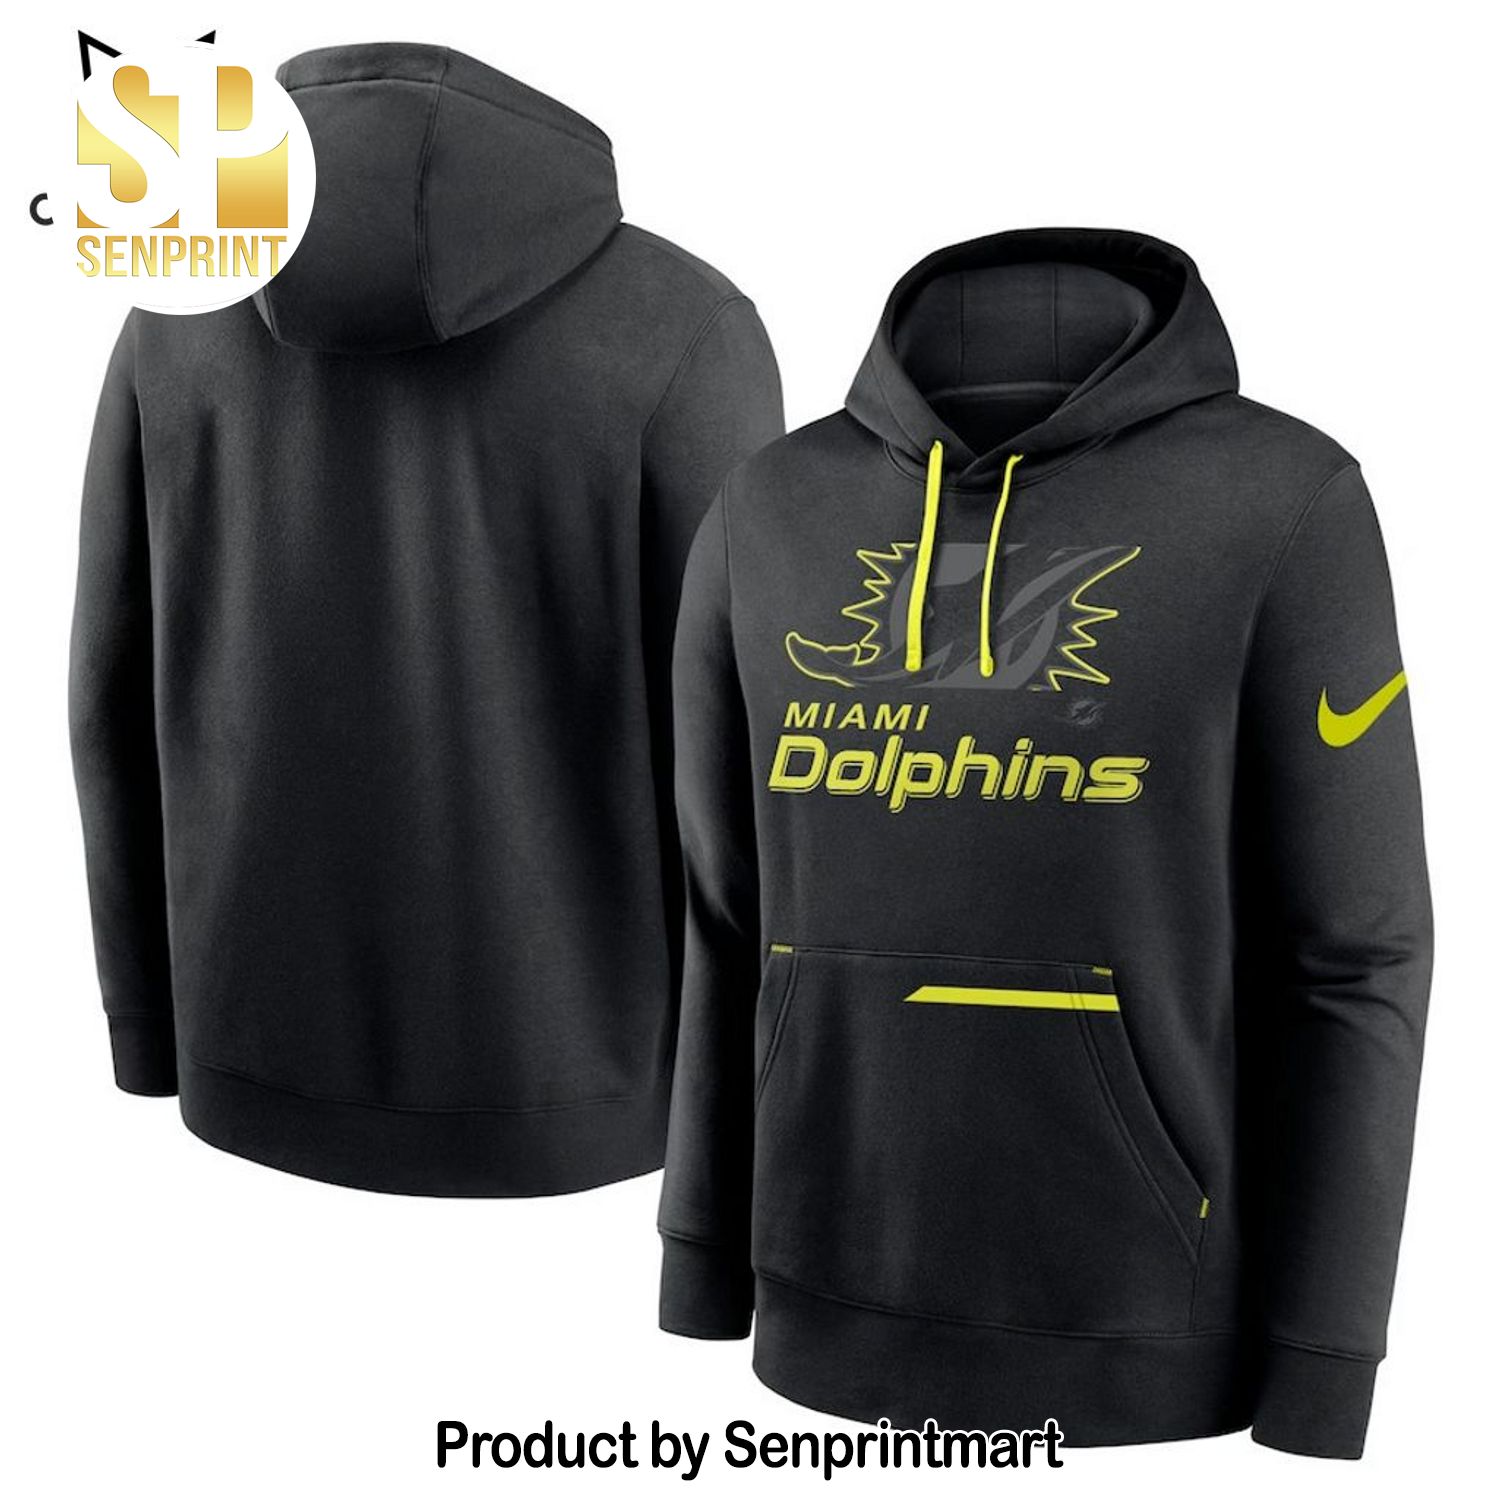 Miami Dolphins Logo Yellow Black Design Full Printing Shirt